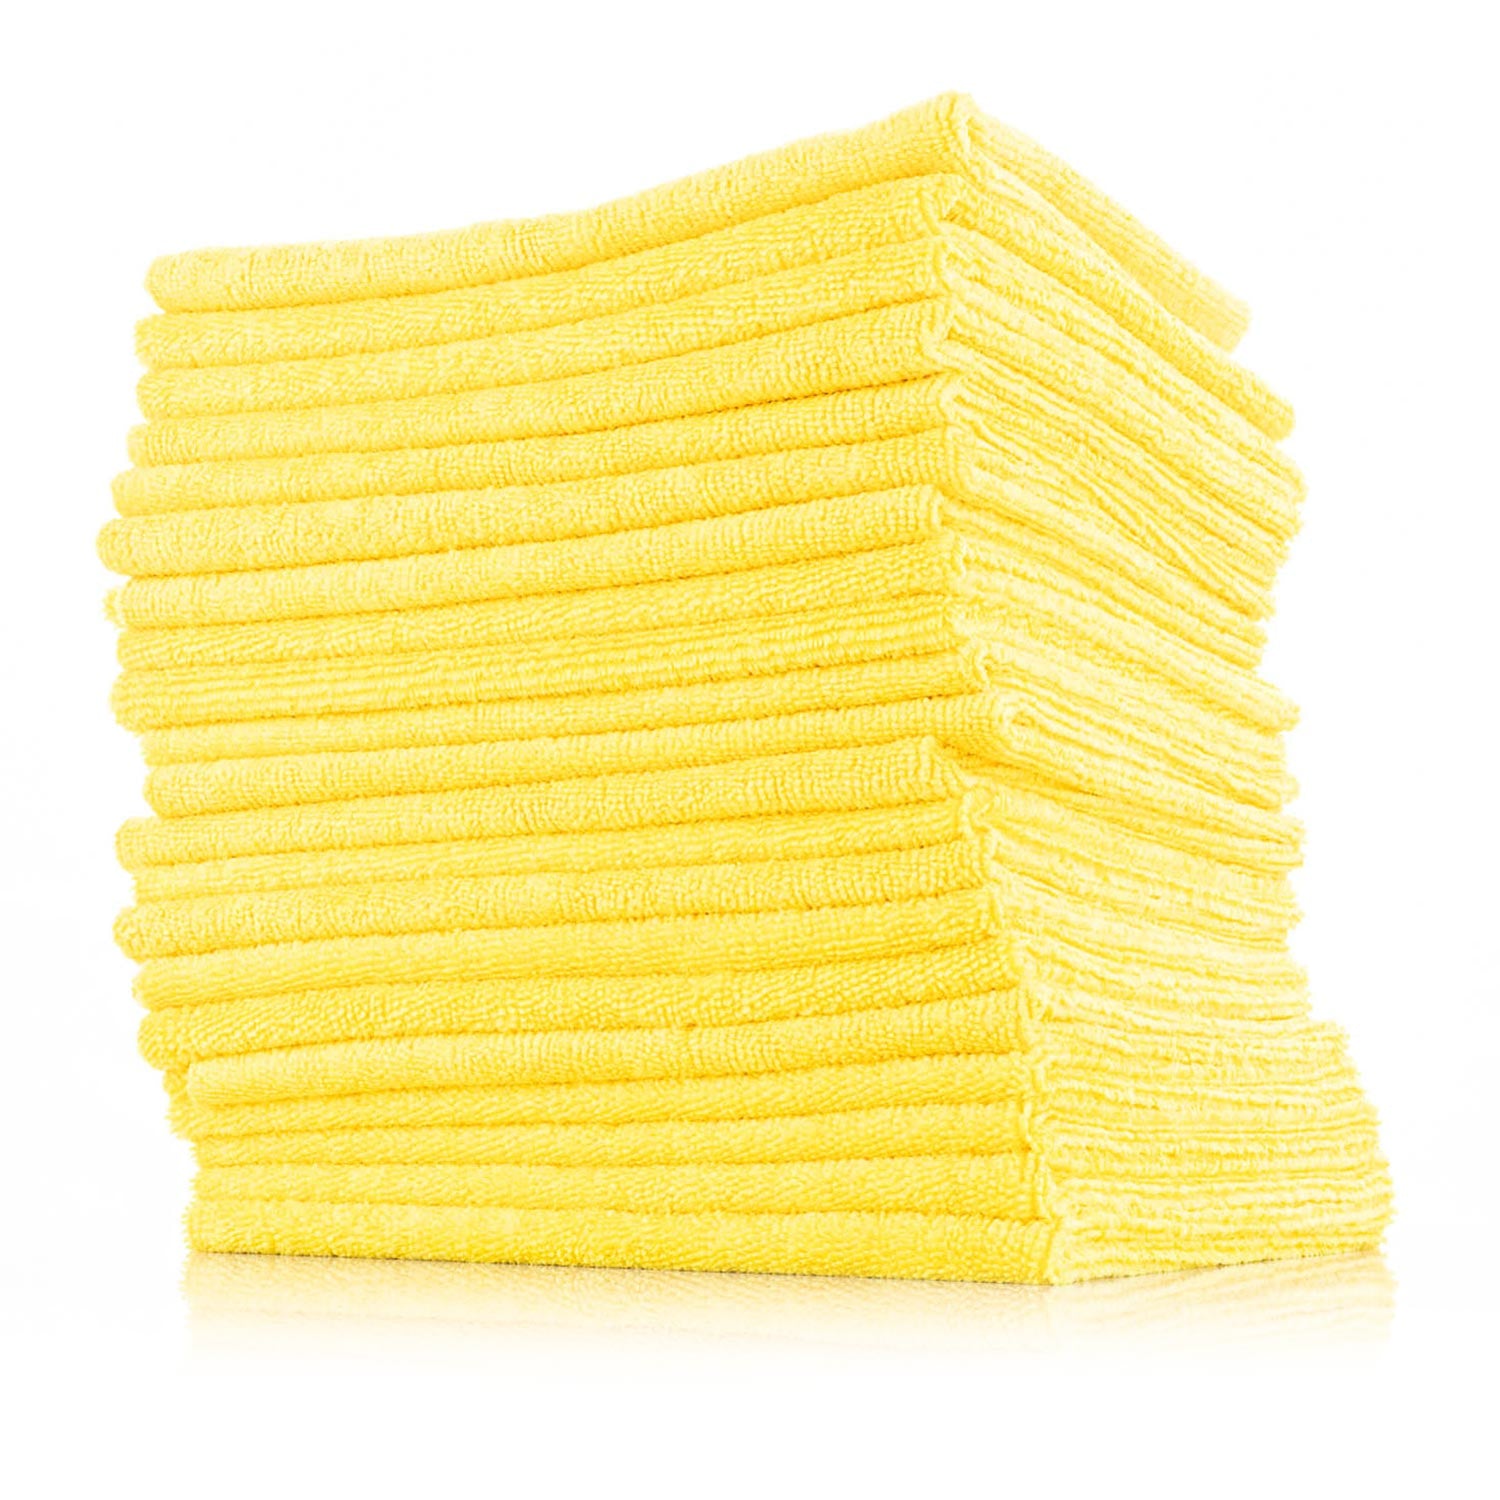 Premium Grade Edgeless Microfiber Towels (5 pack)